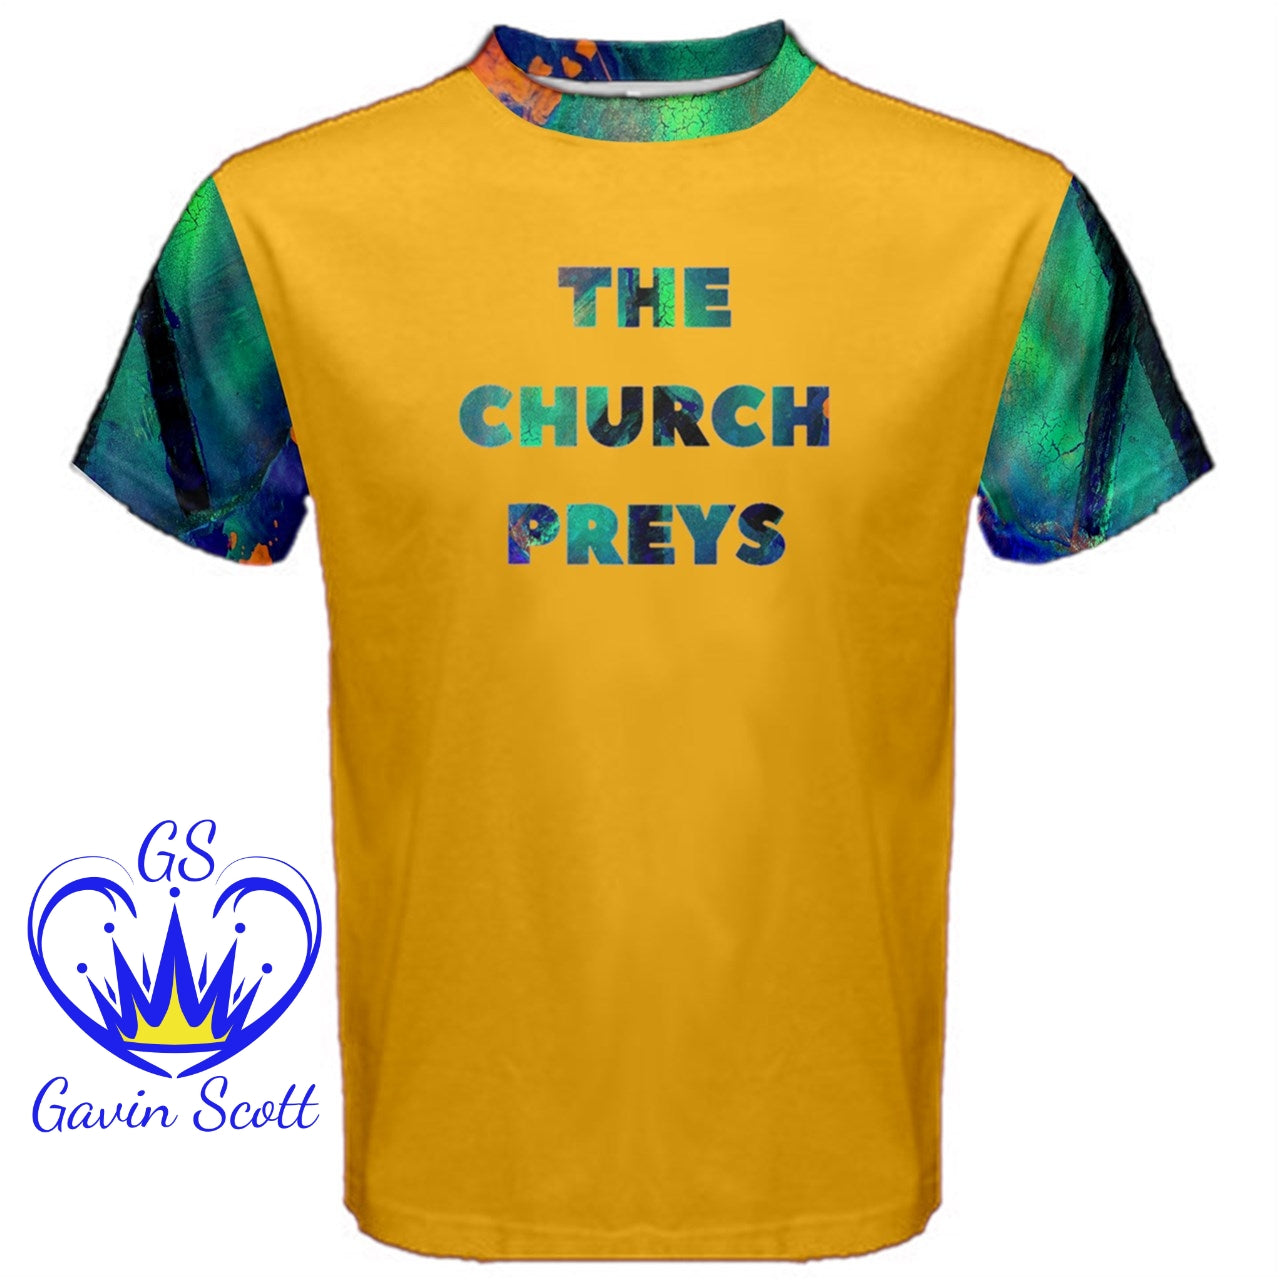 Gavin Scott "THE CHURCH PREYS" Cotton Tee (Masc XS-5XL)